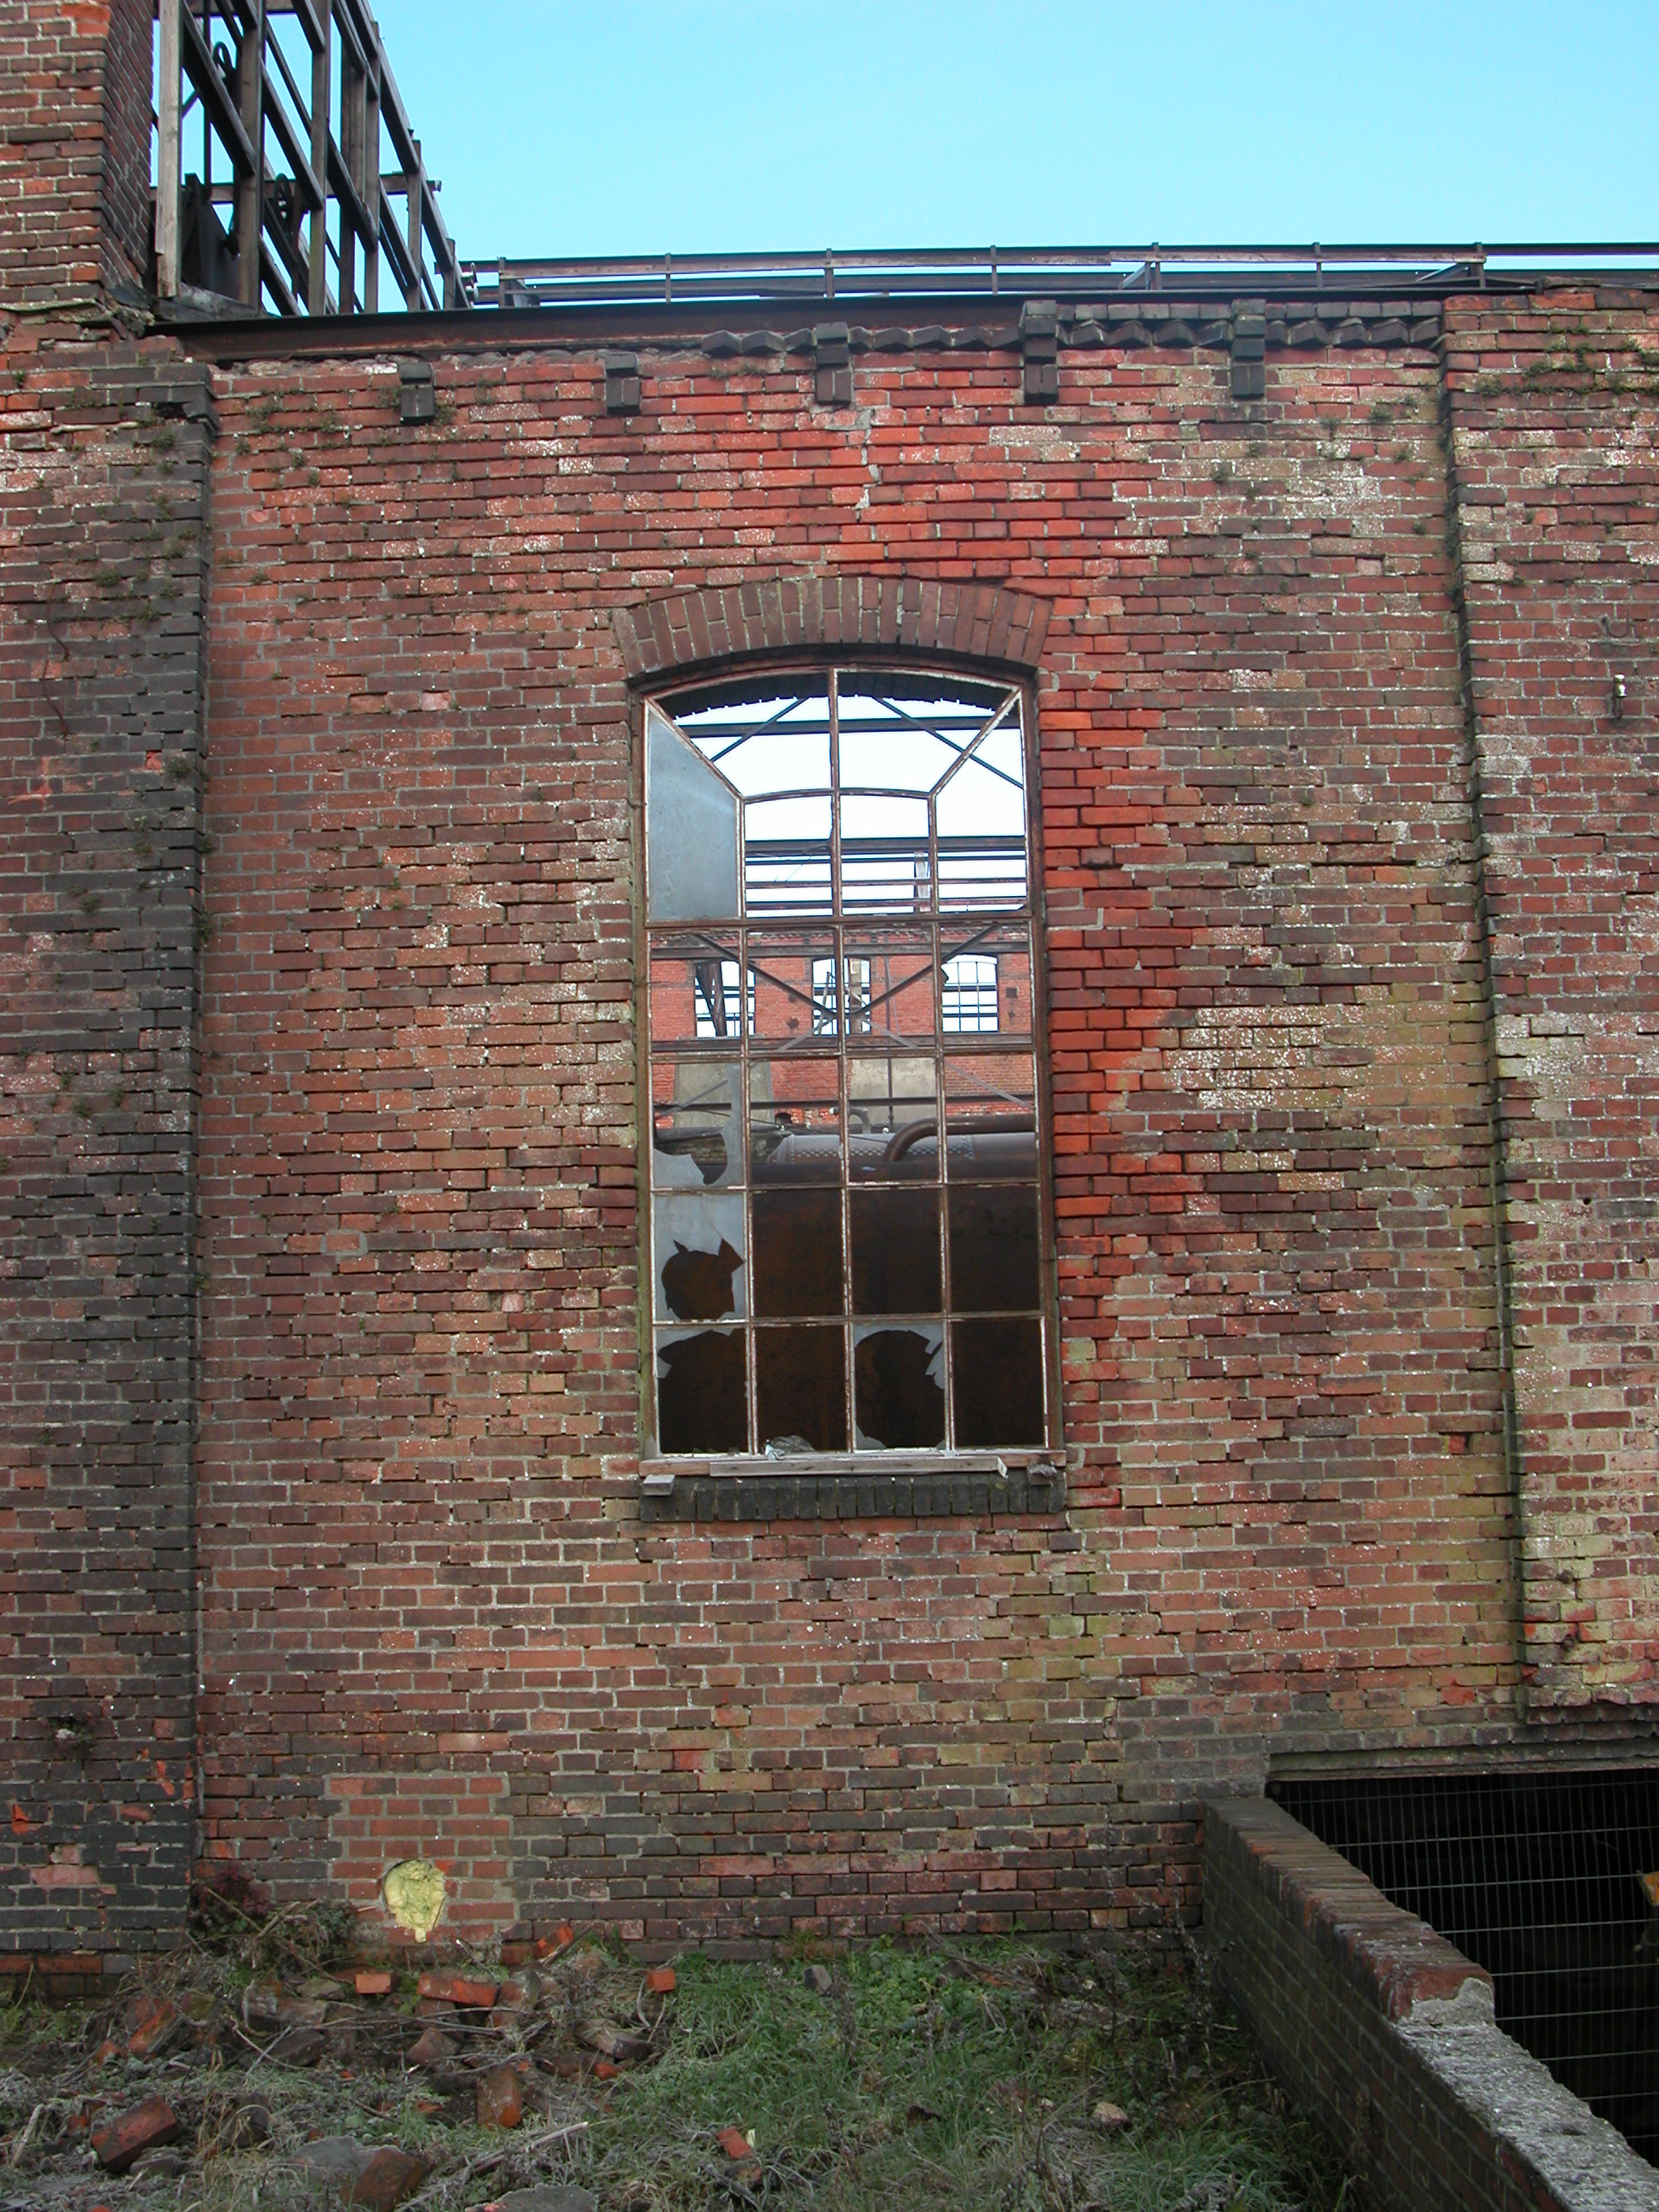 old abandoned factory brick wall masonry image